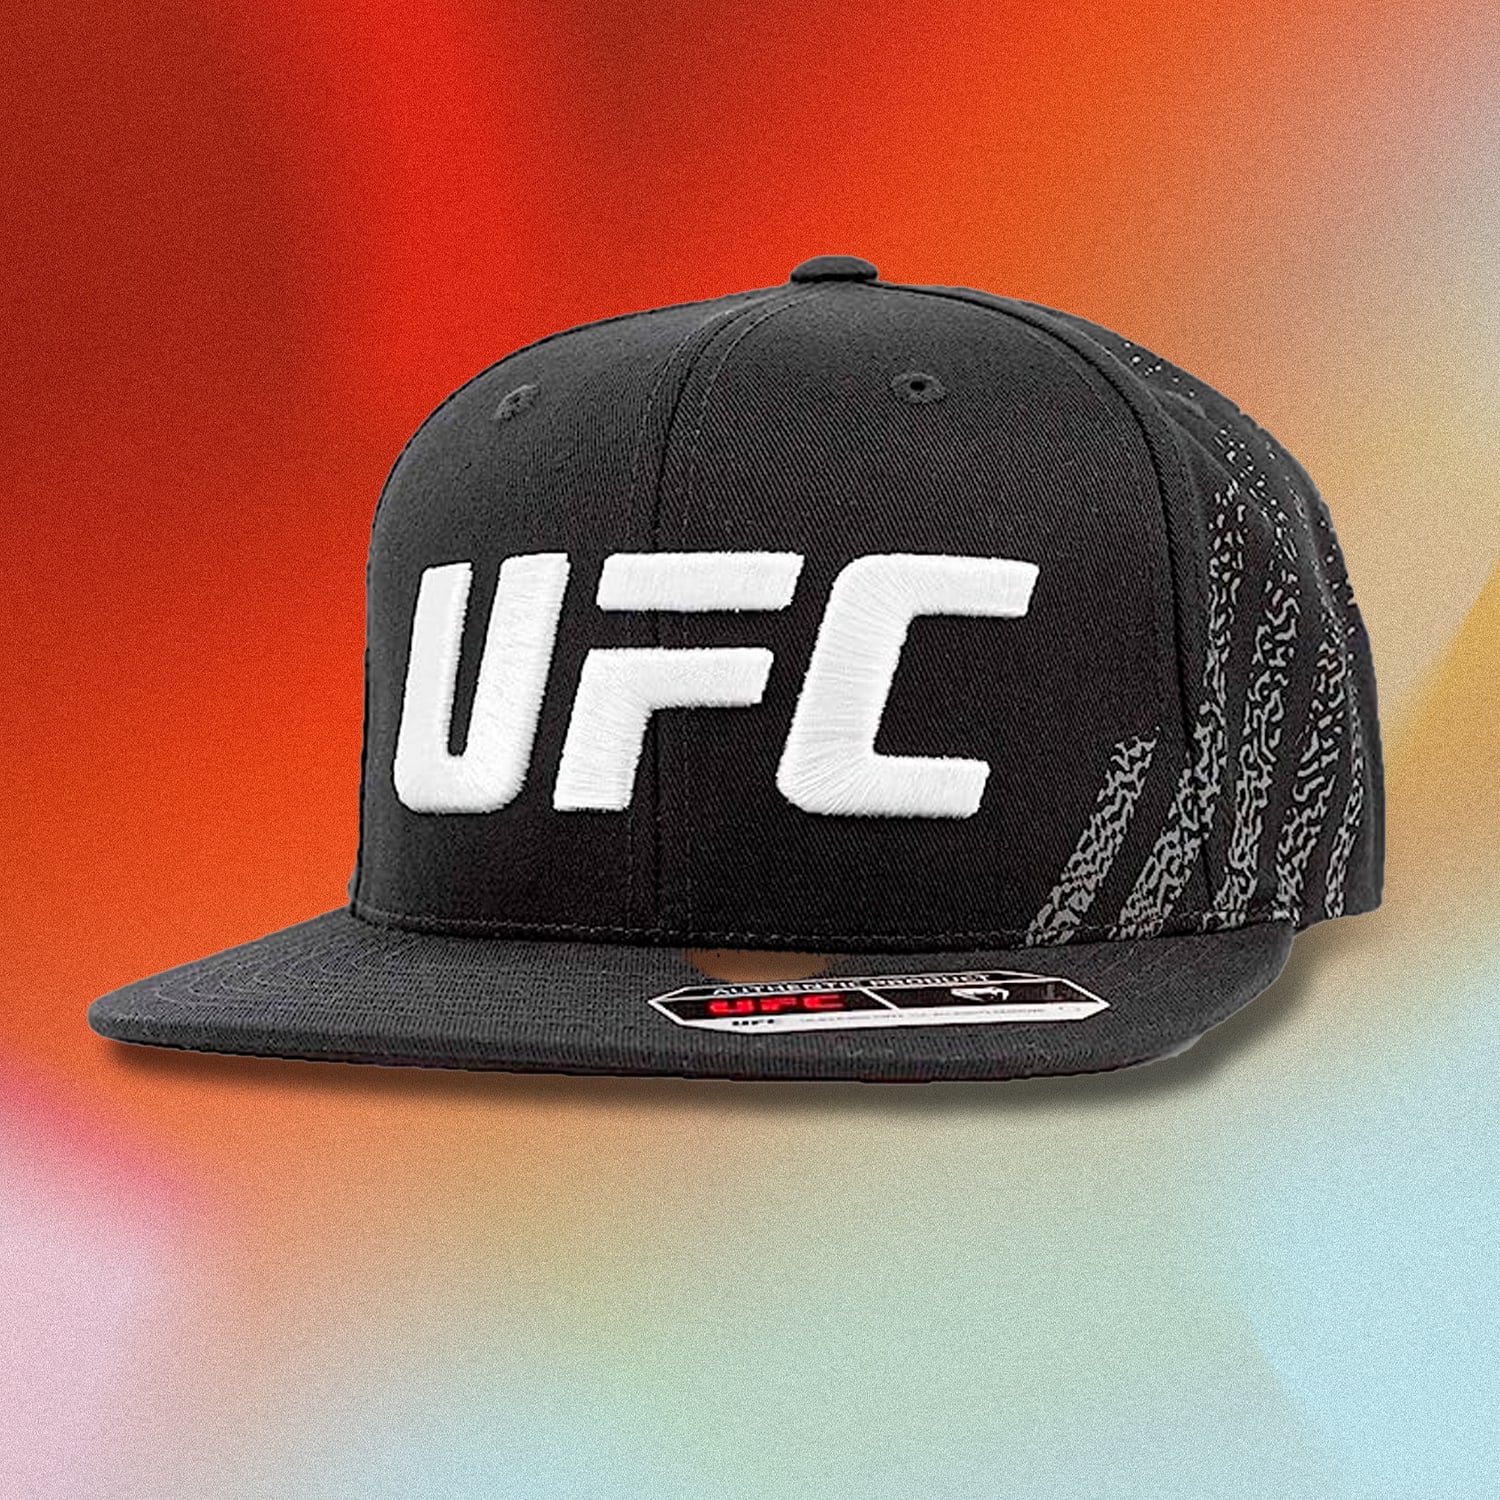 Elise Reed Authentic Autographed UFC Hat